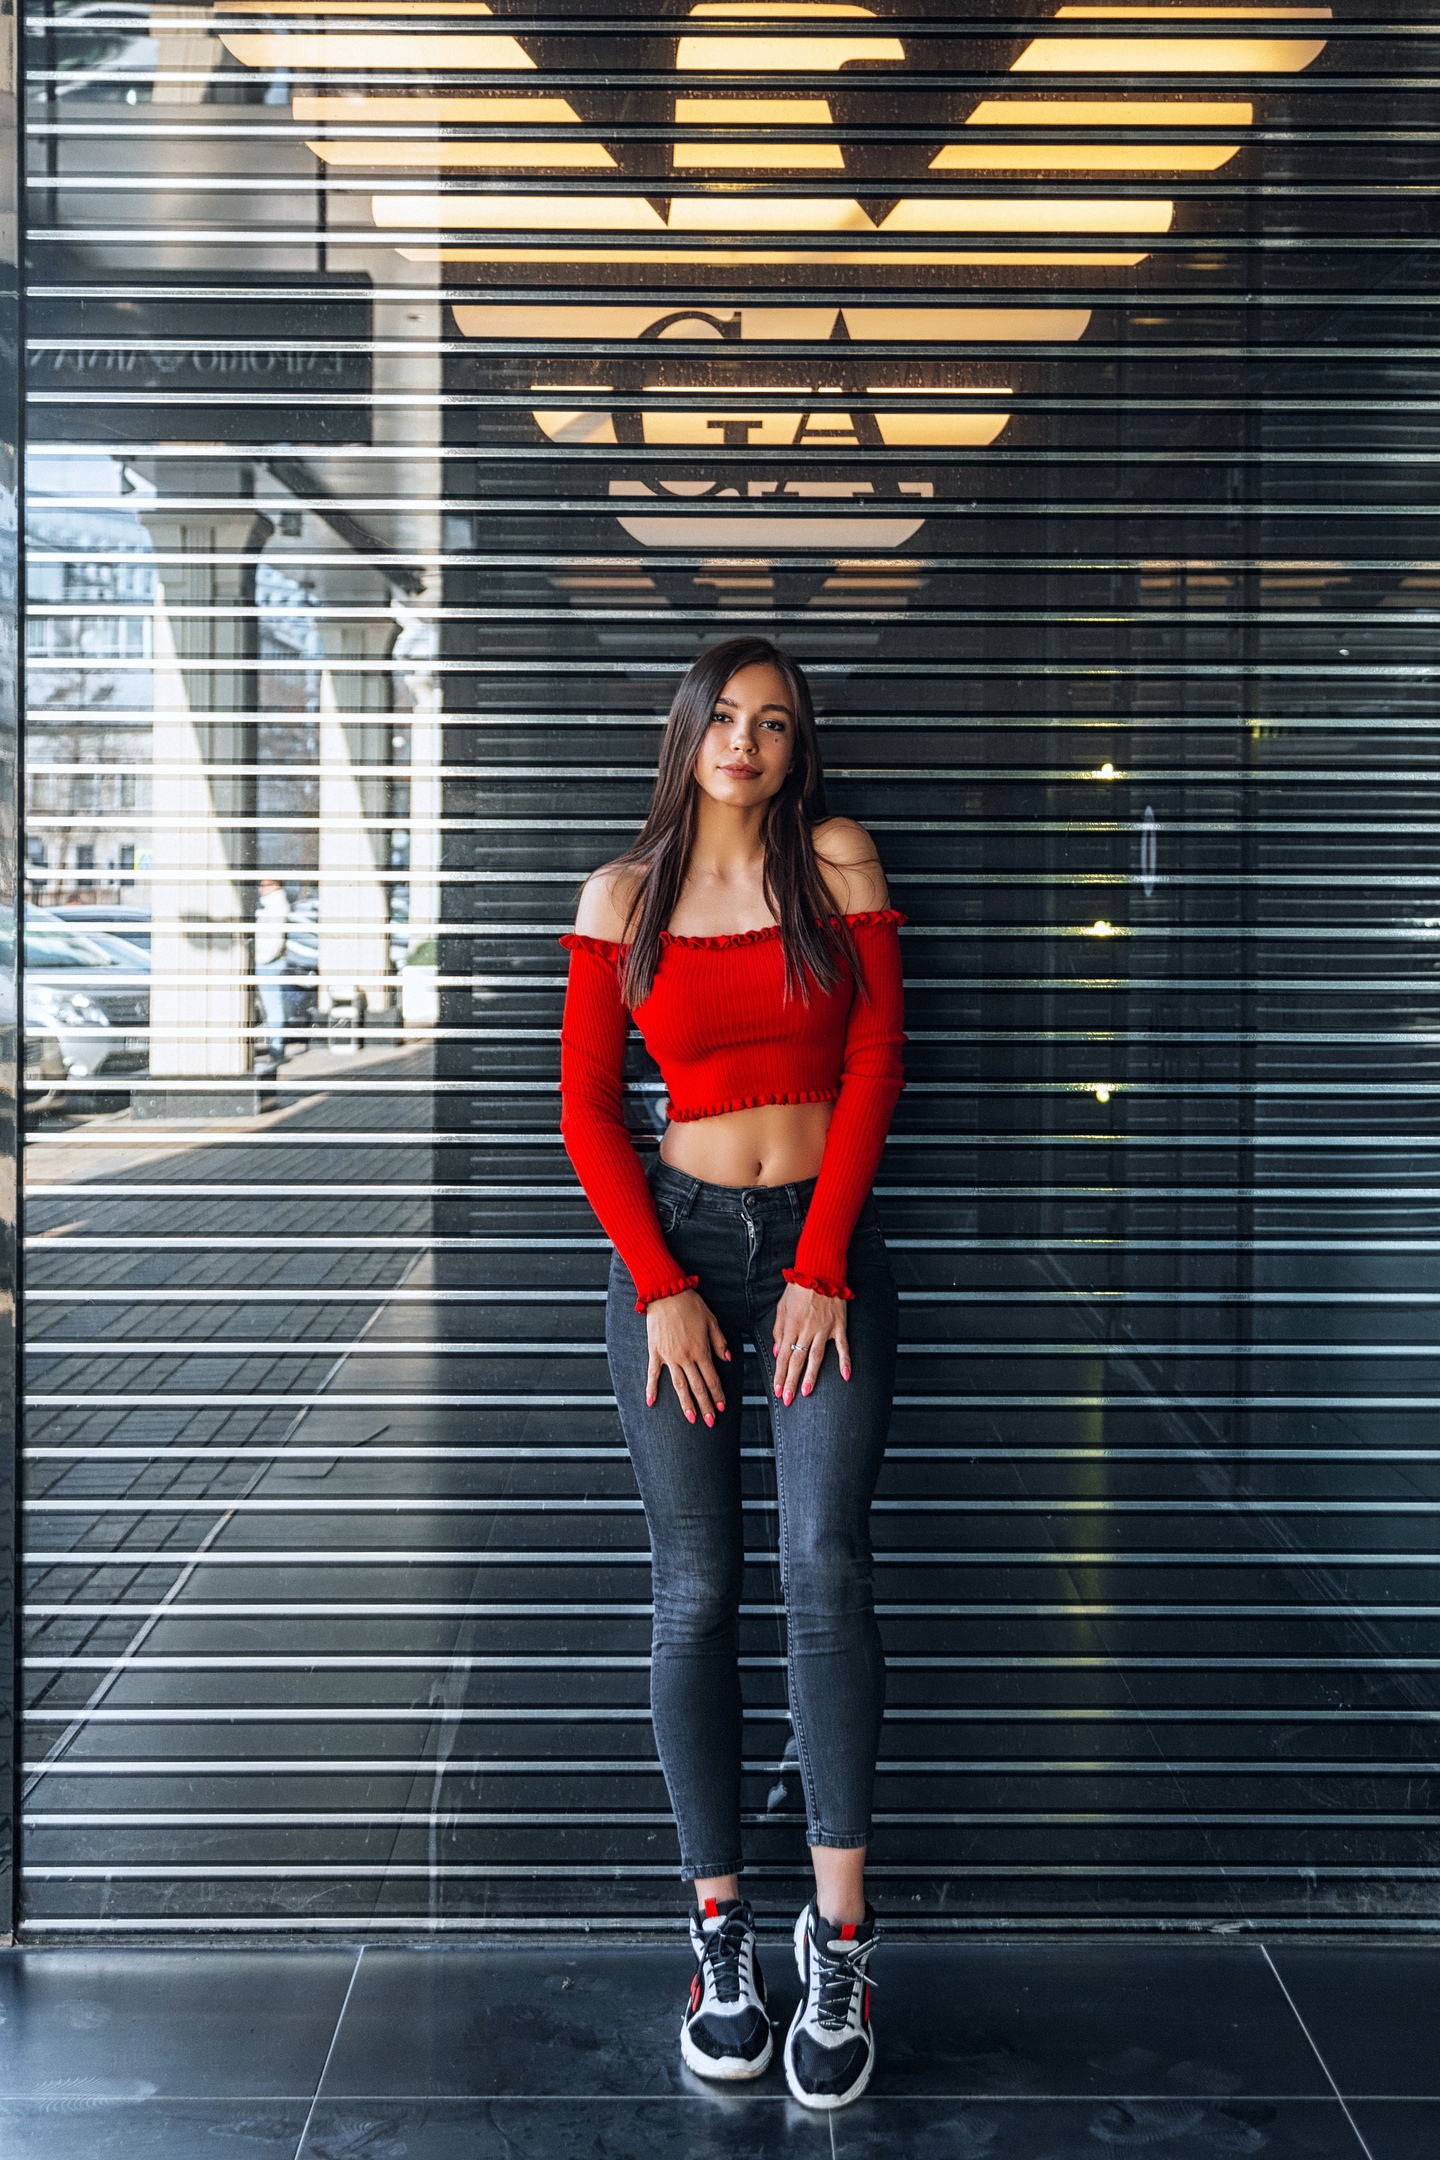 Oleg Klimin Women Olya Nefyodova Red Clothing Bare Shoulders Jeans Denim Reflection Sneakers Model B 1440x2160